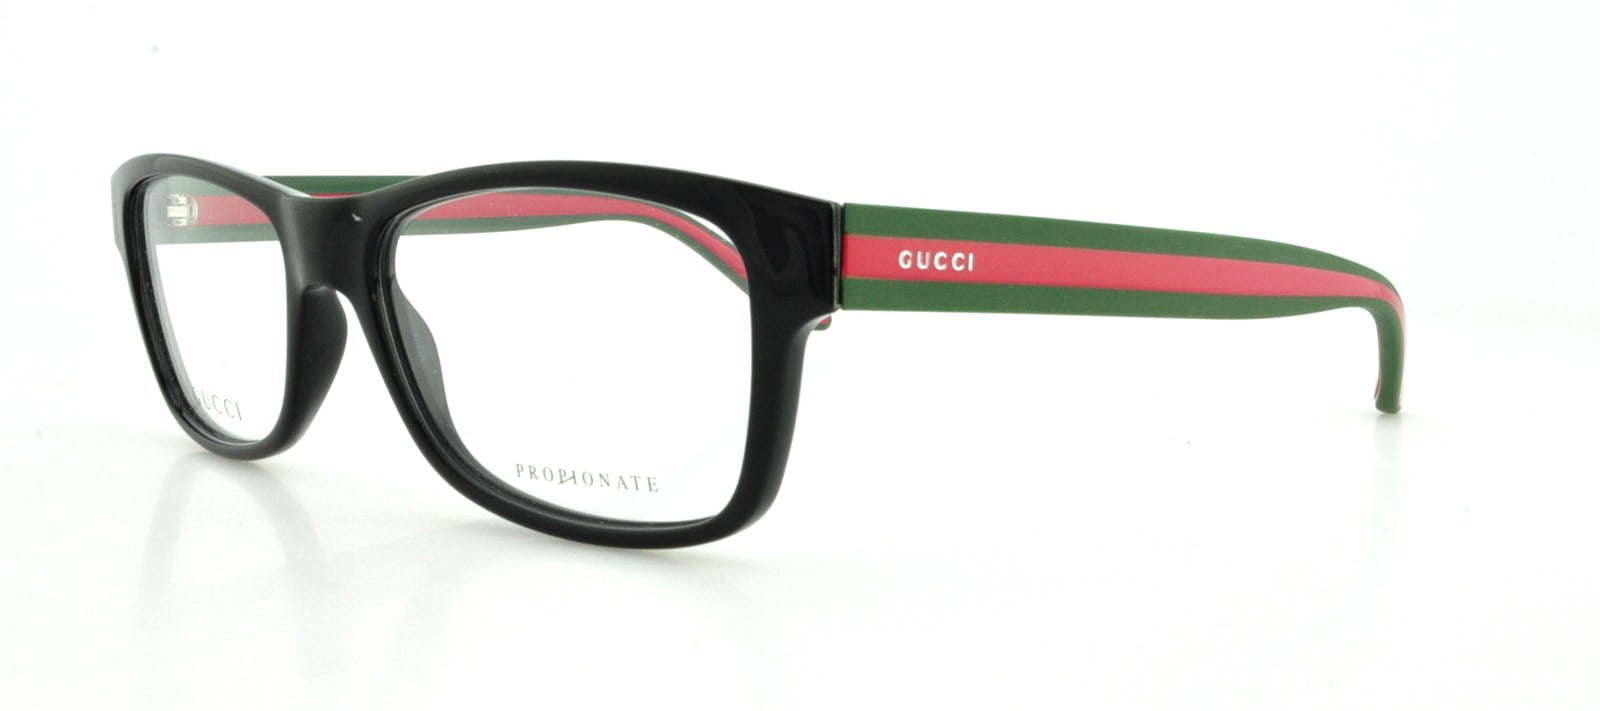 gucci glasses walmart